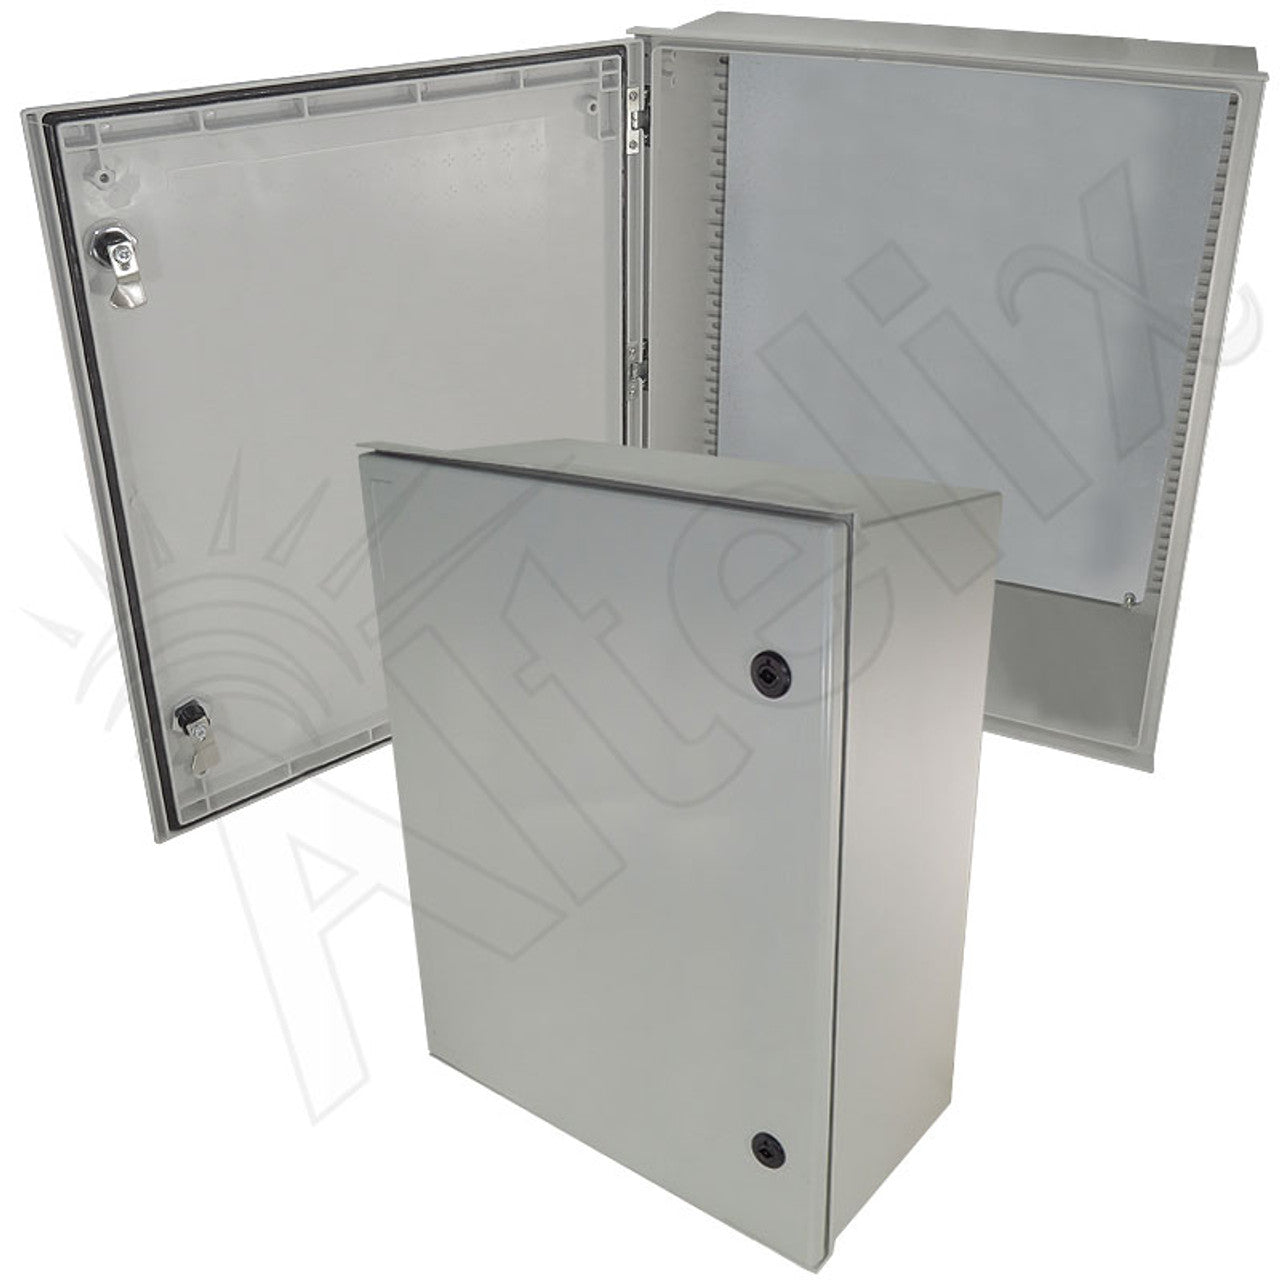 Altelix NEMA 3X Fiberglass Weatherproof Enclosure with Steel Equipment Mounting Plate